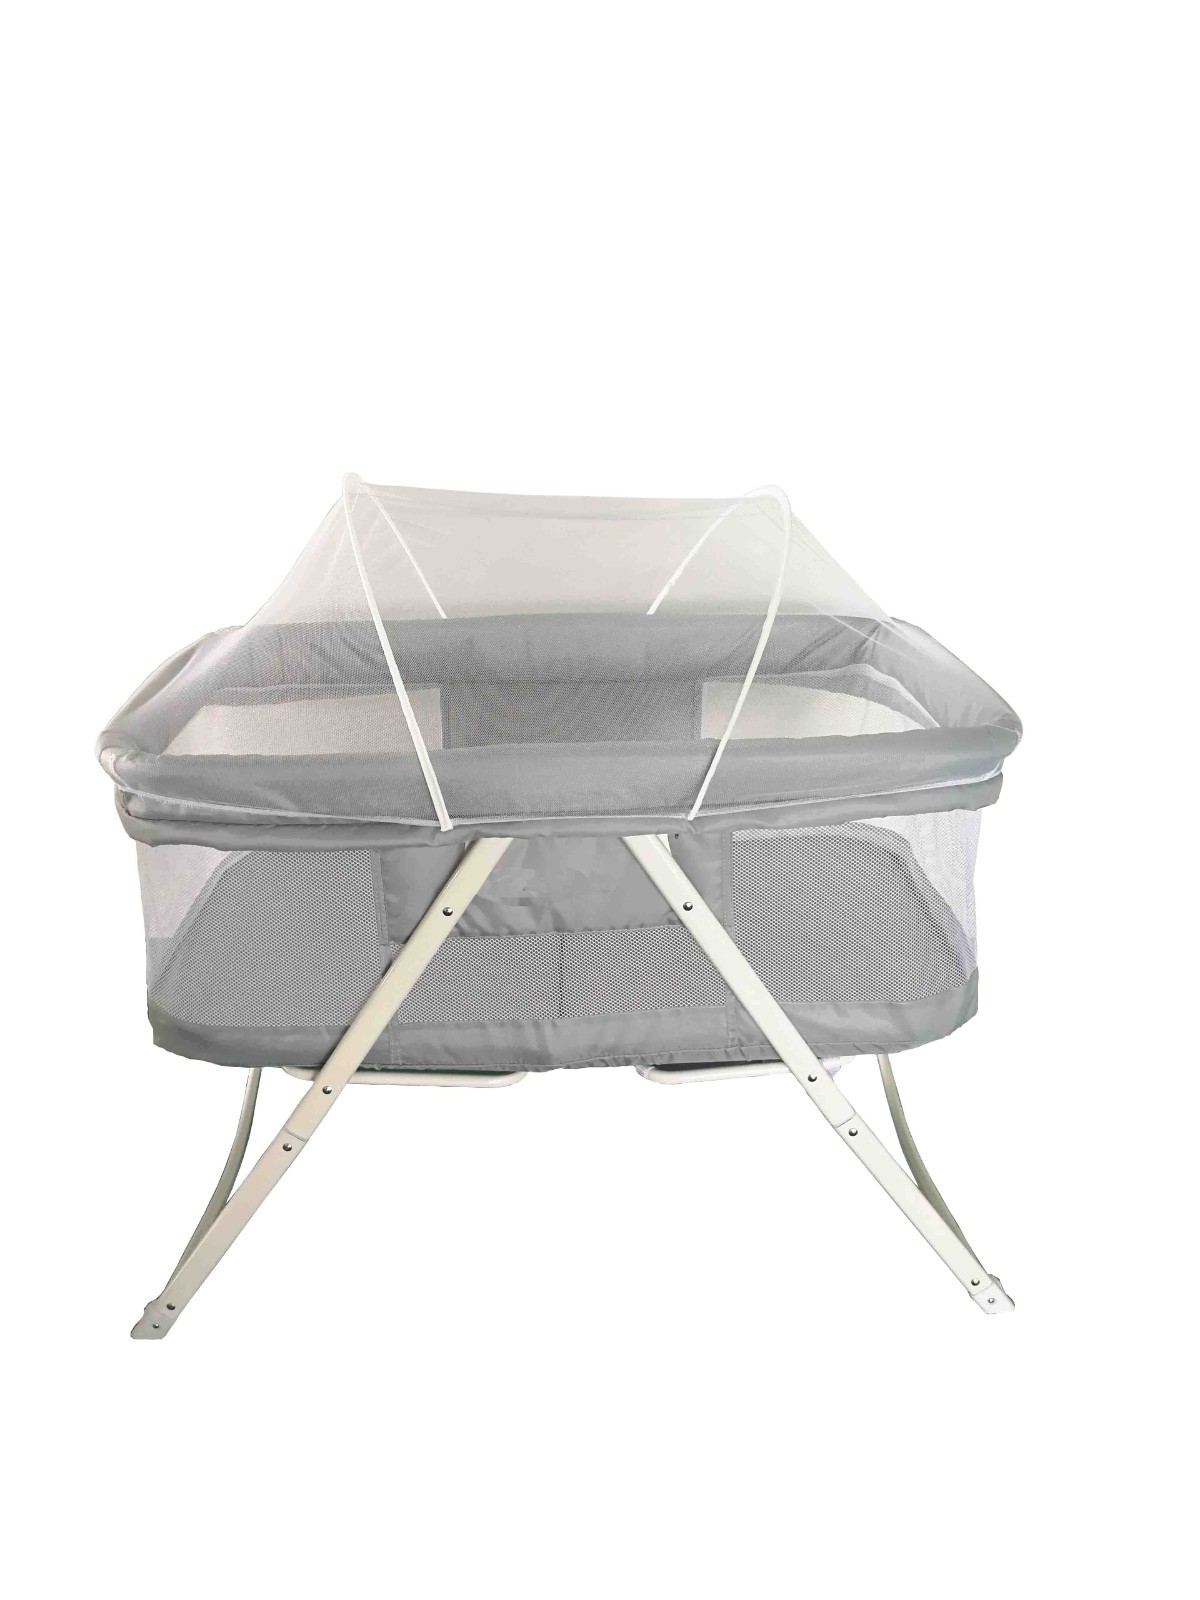 baby cradle bassinet